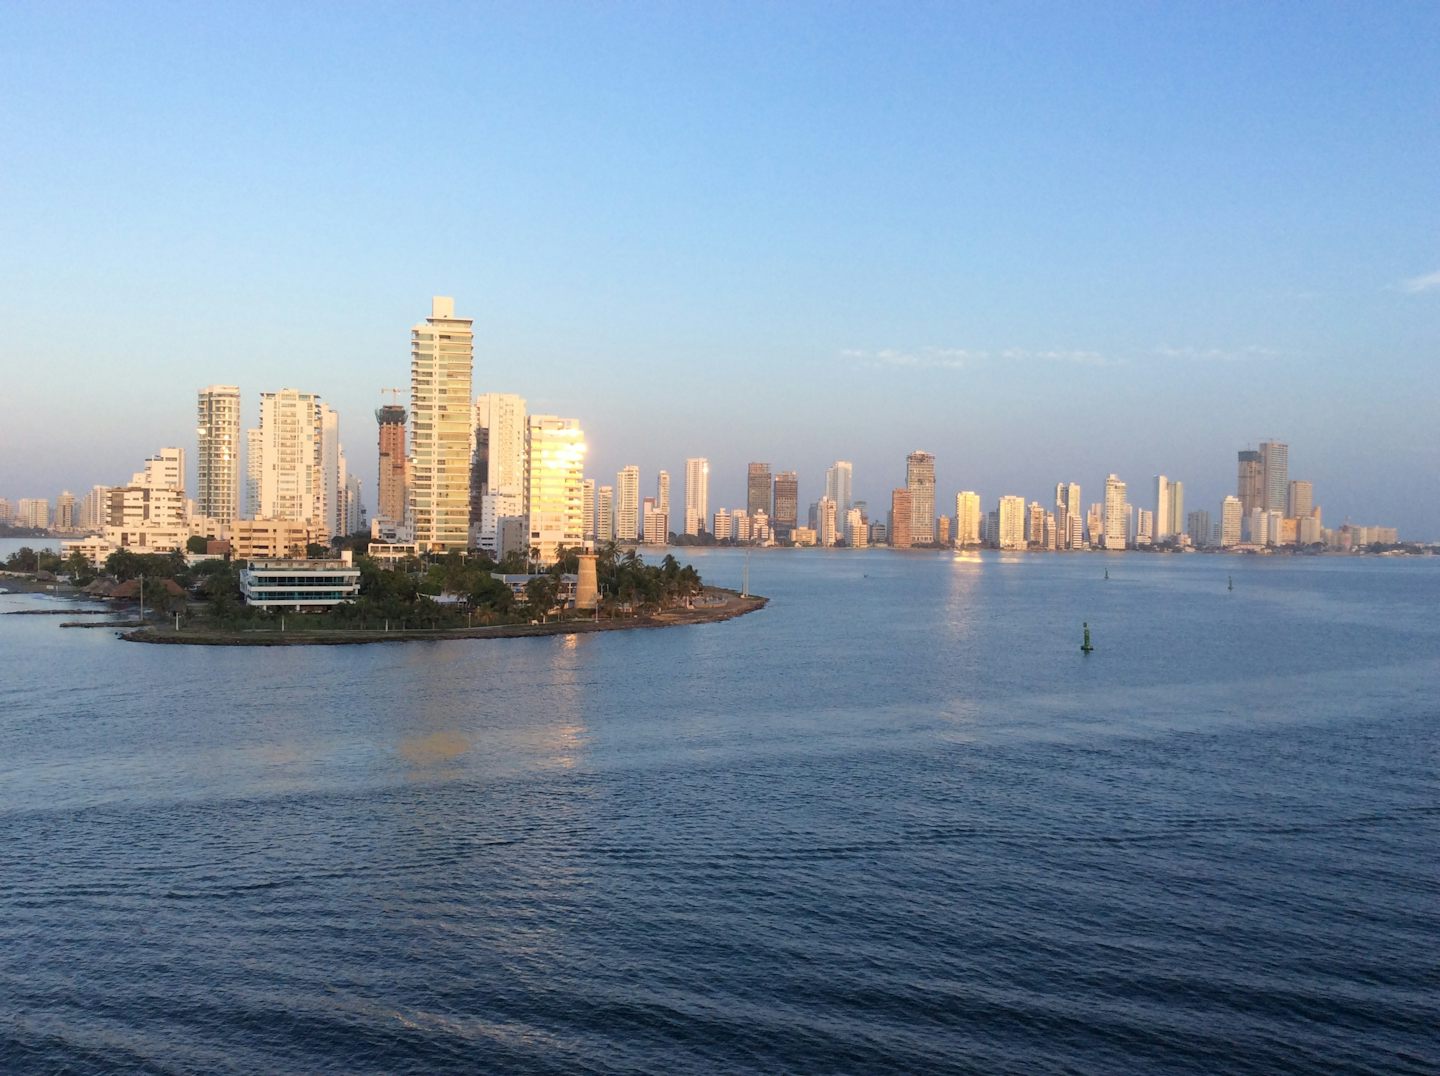 Cartagena, Colombia skyline